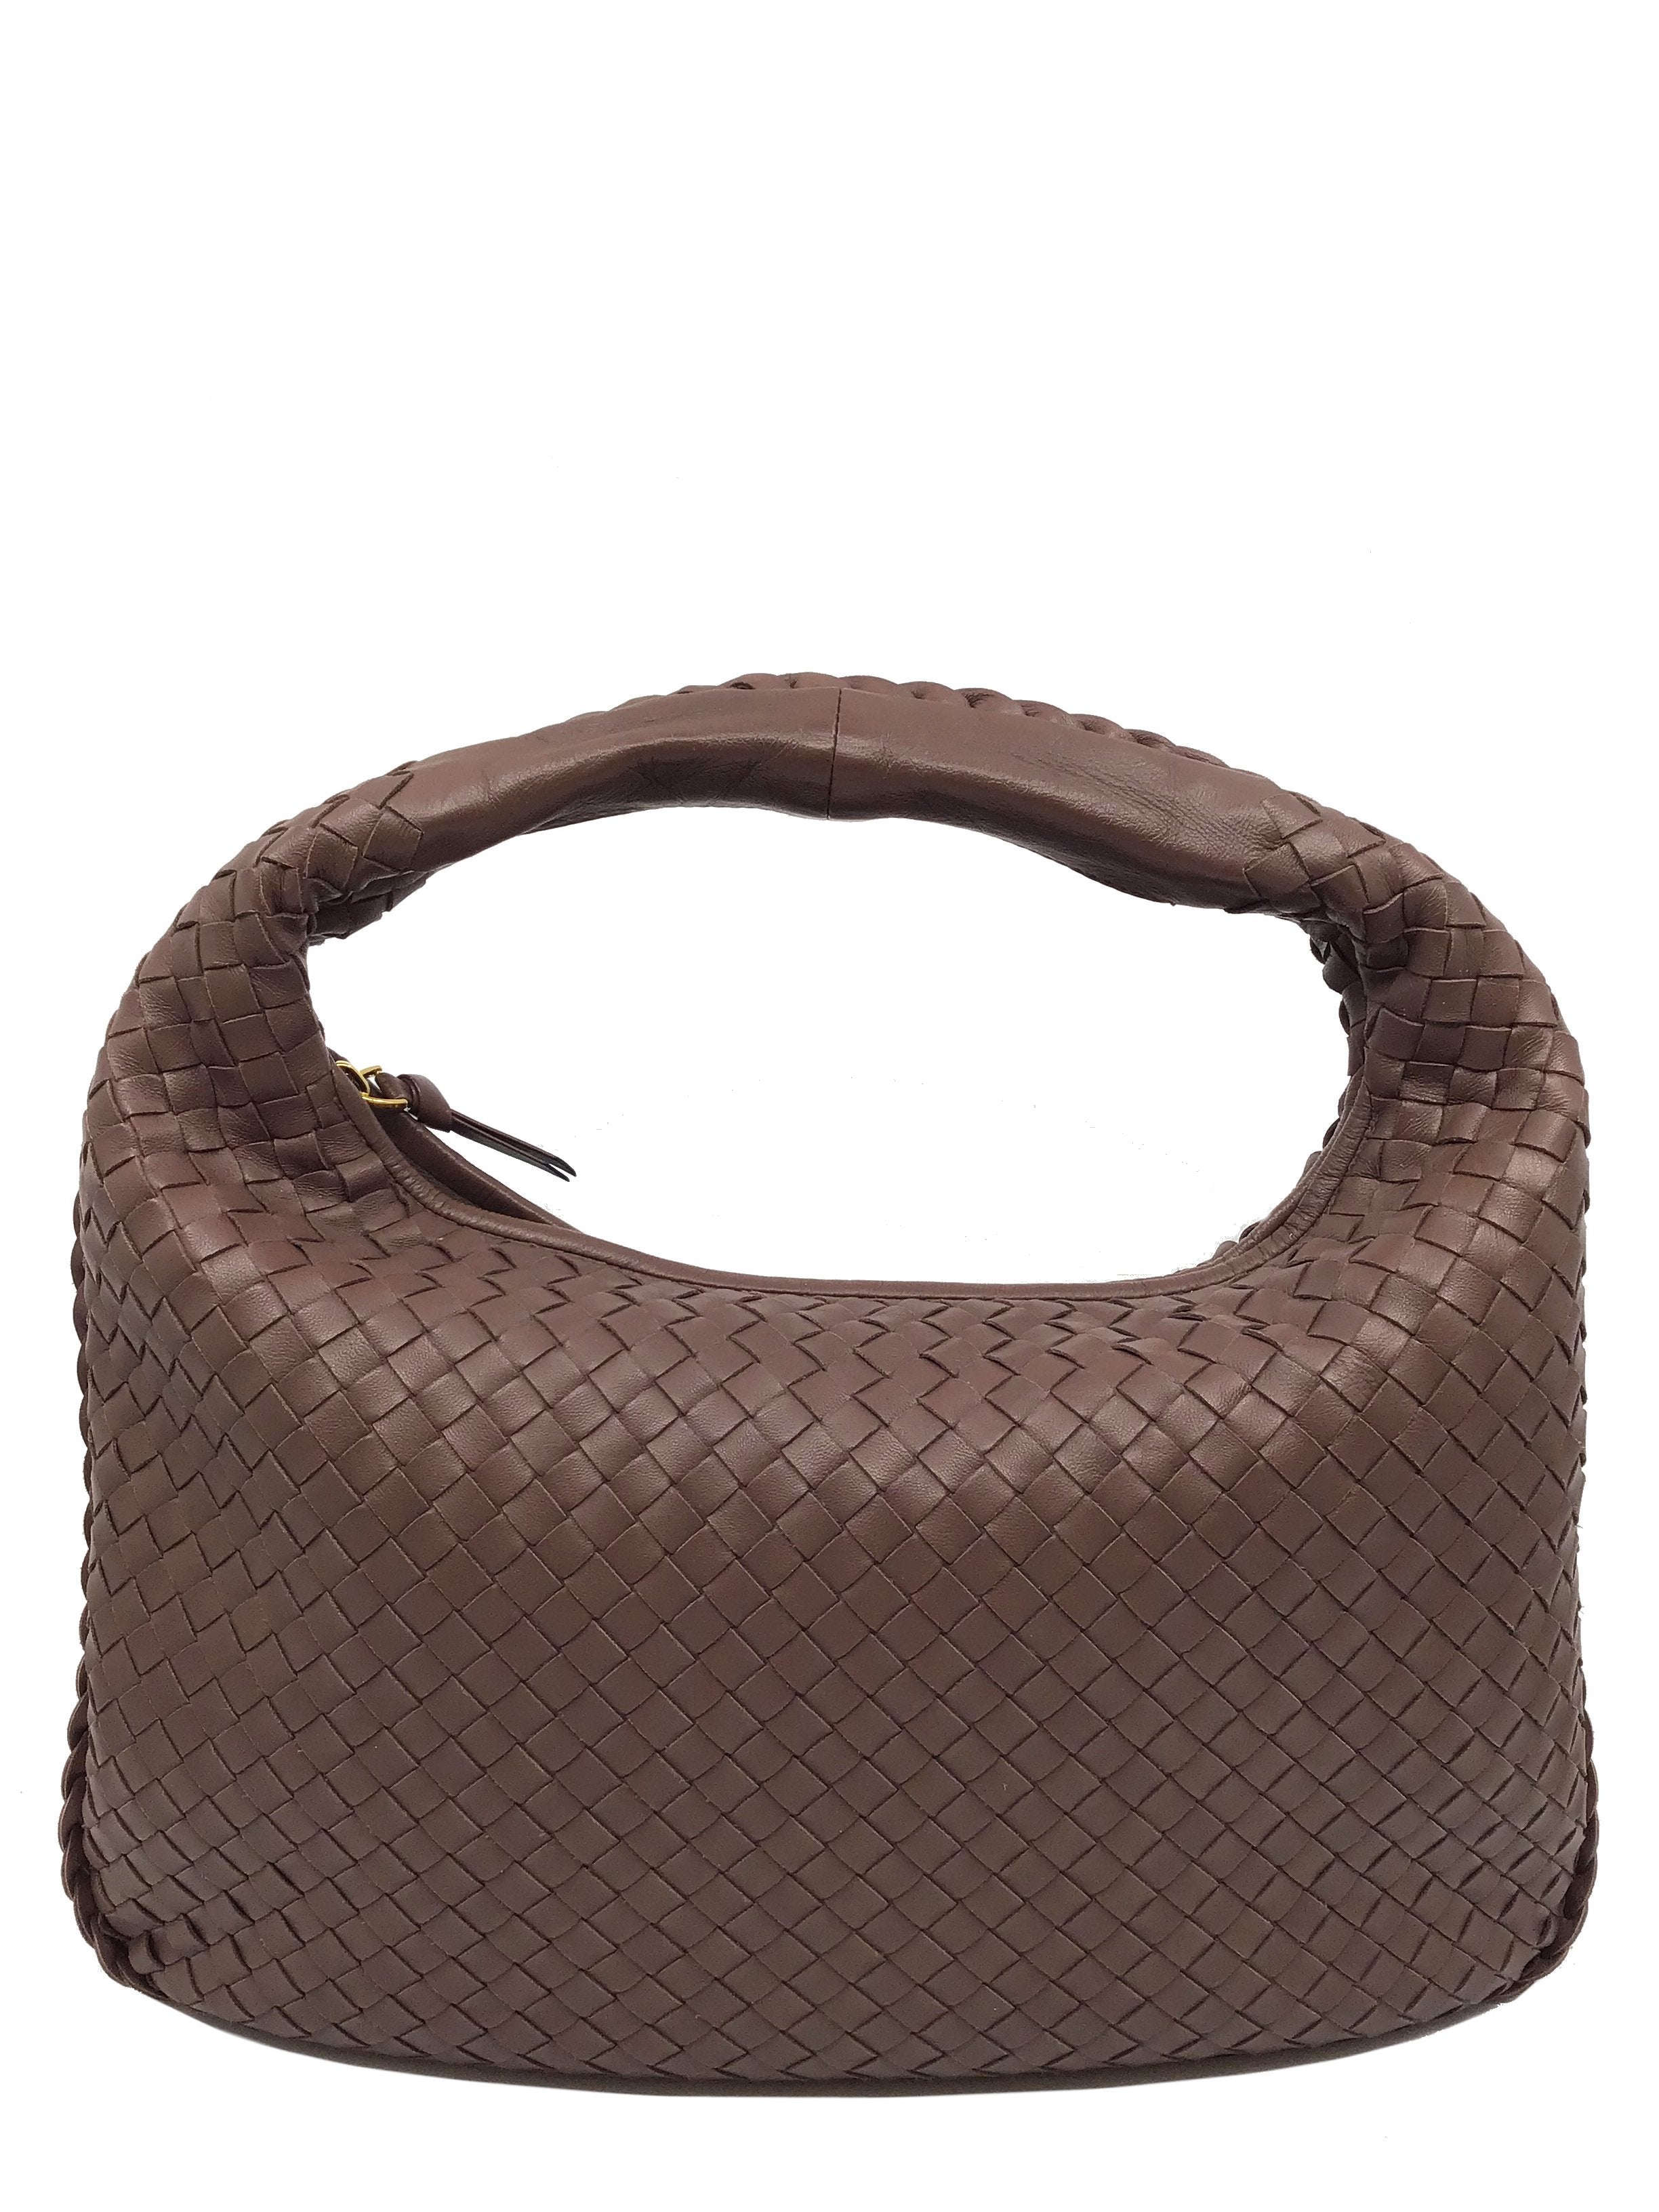 Bottega Veneta, Bags, Authentic Bottega Veneta Intrecciato Hobo Brown  Leather Bag Beautiful